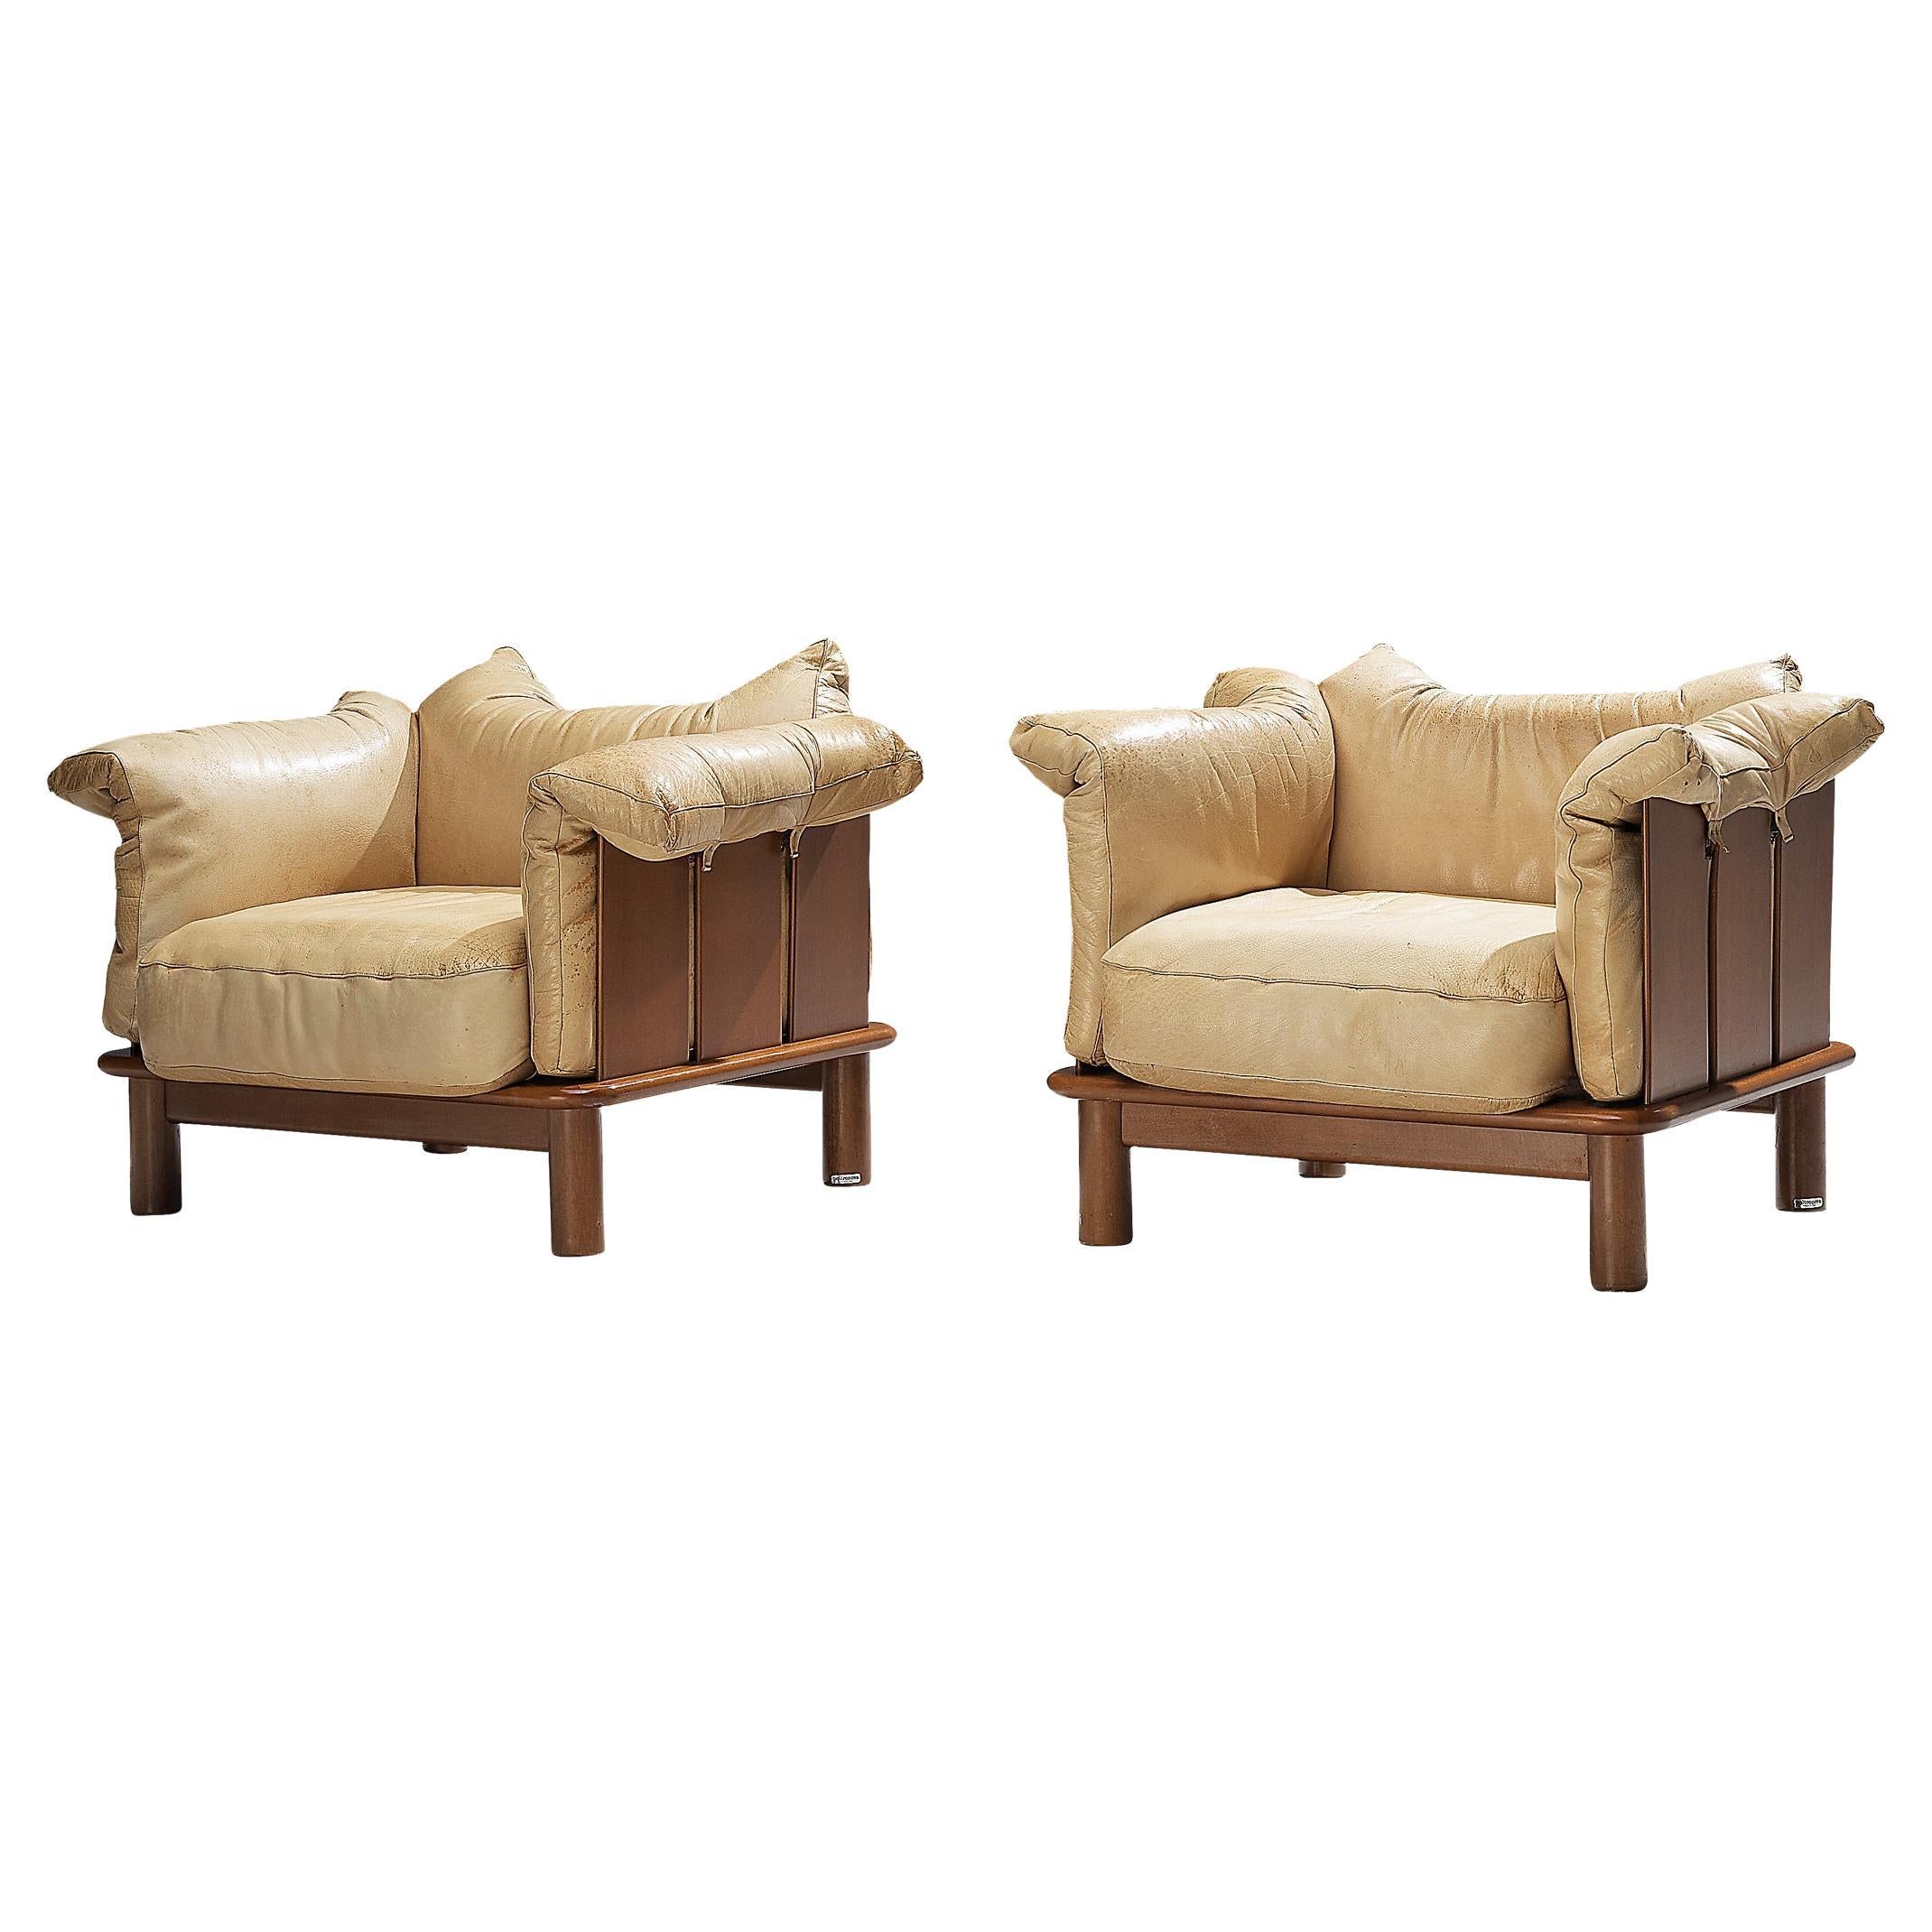 De Pas, D’urbino & Lomazzi for Poltronova Pair of Lounge Chairs